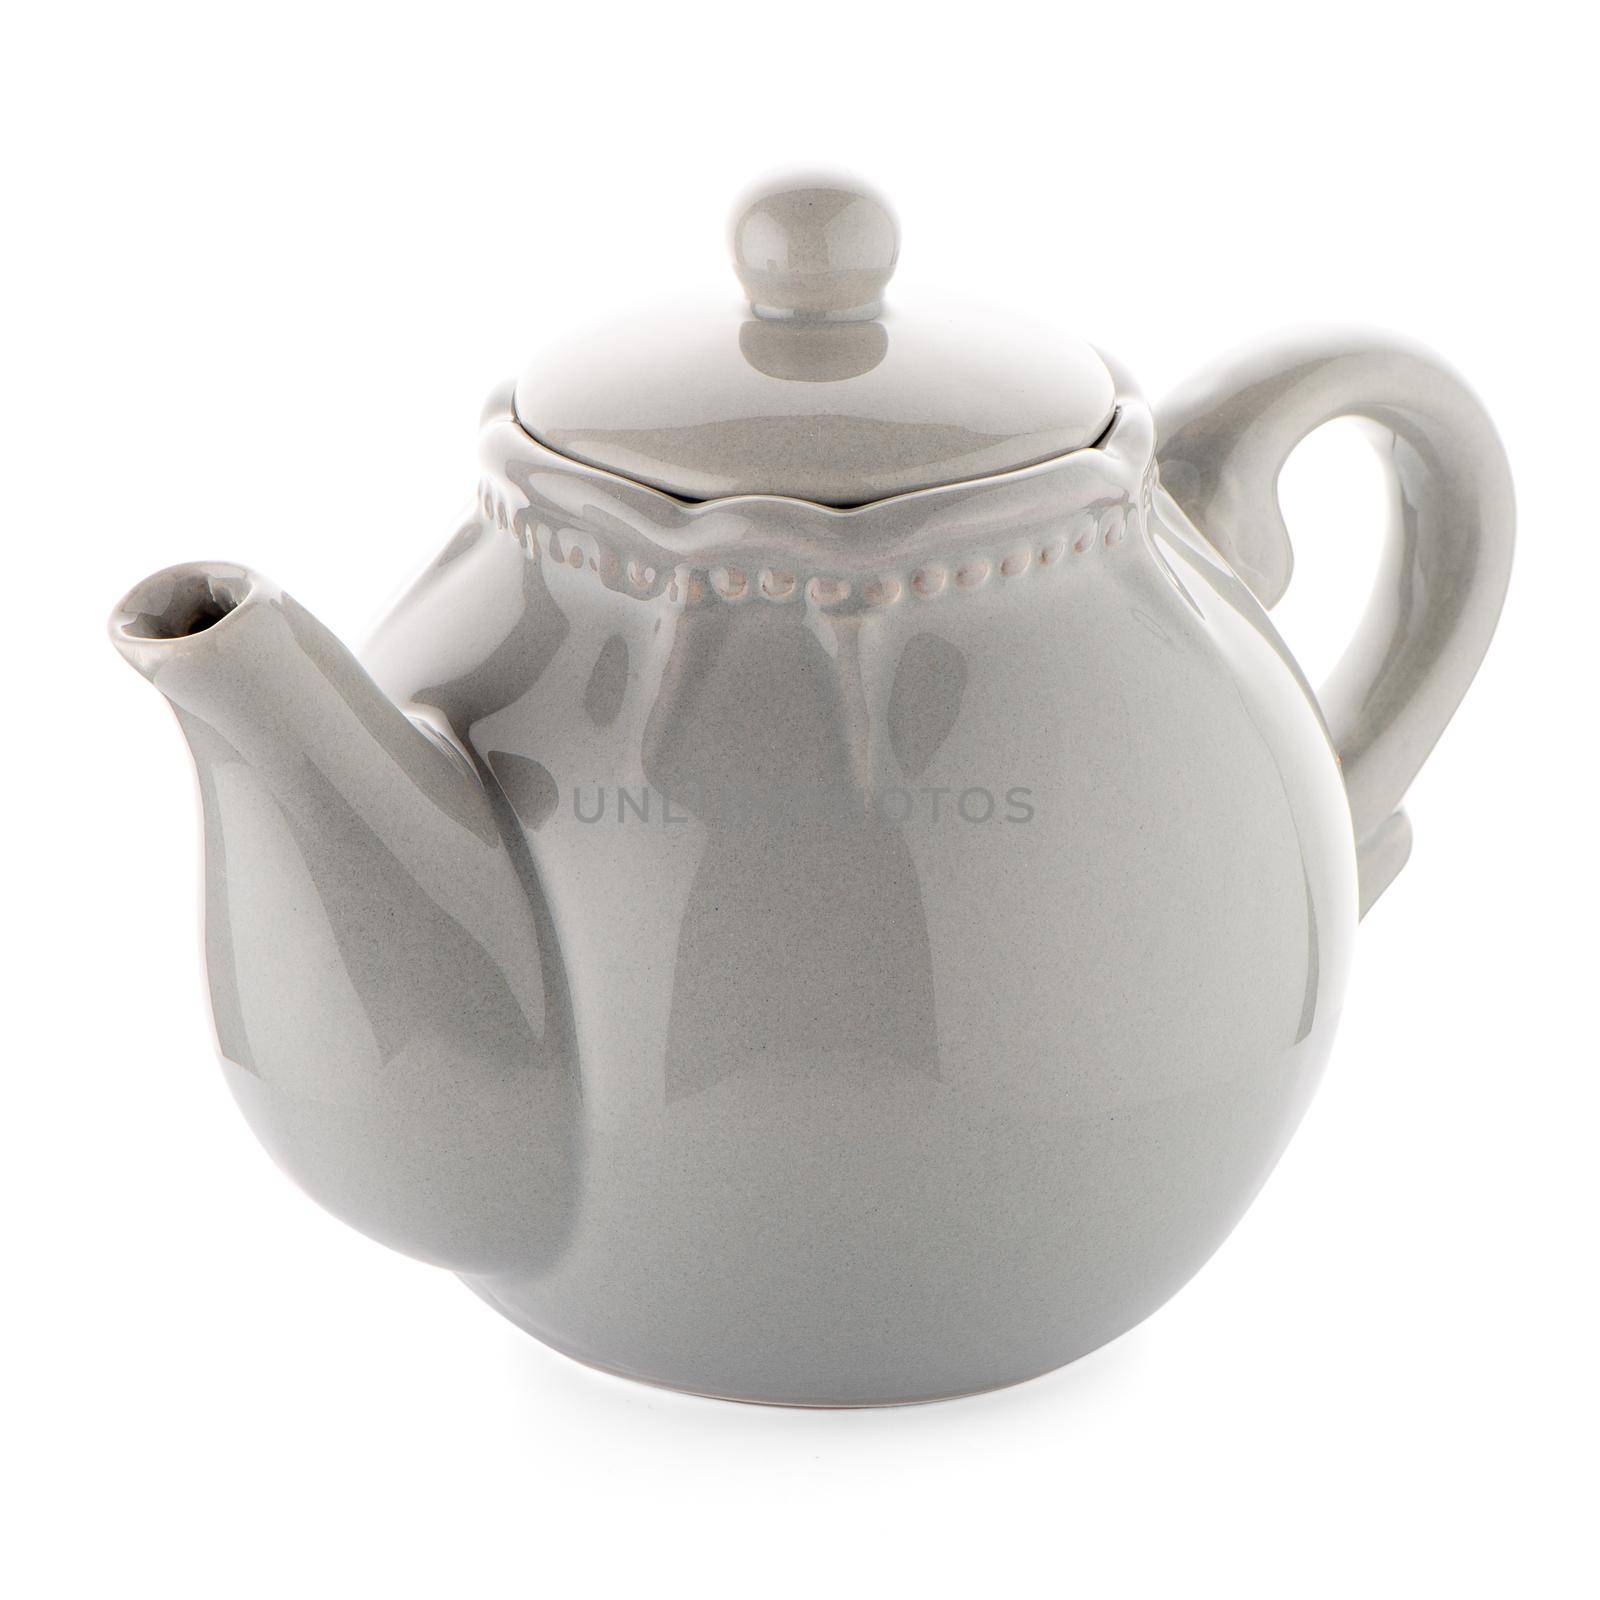 Grey teapot isolated on white background.